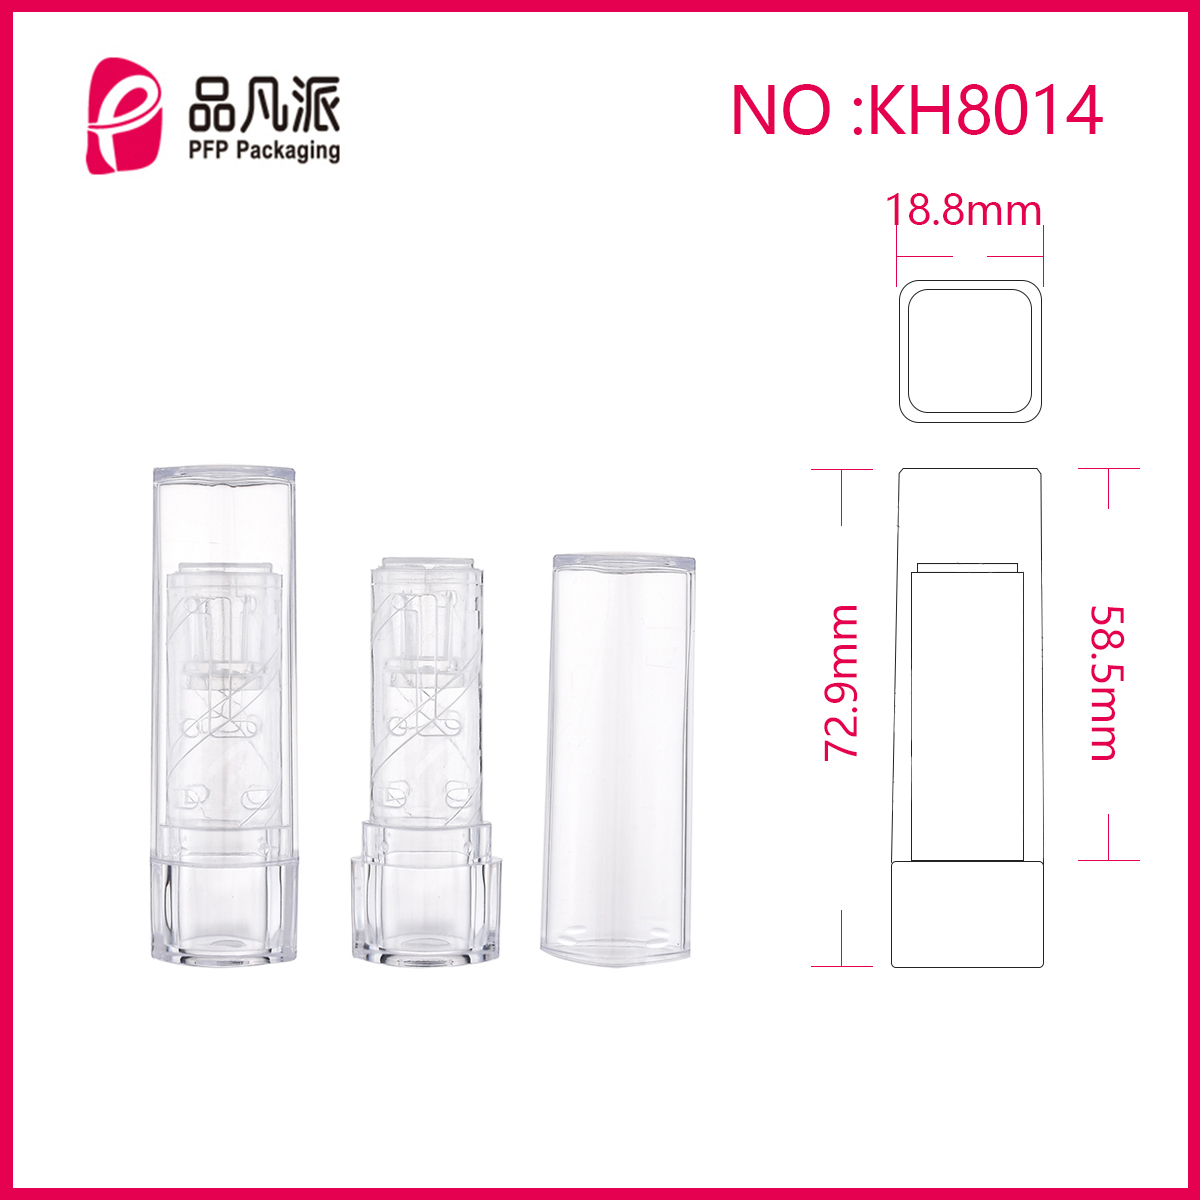 High-Grade Empty Square Clear Tube Lipstick KH8014